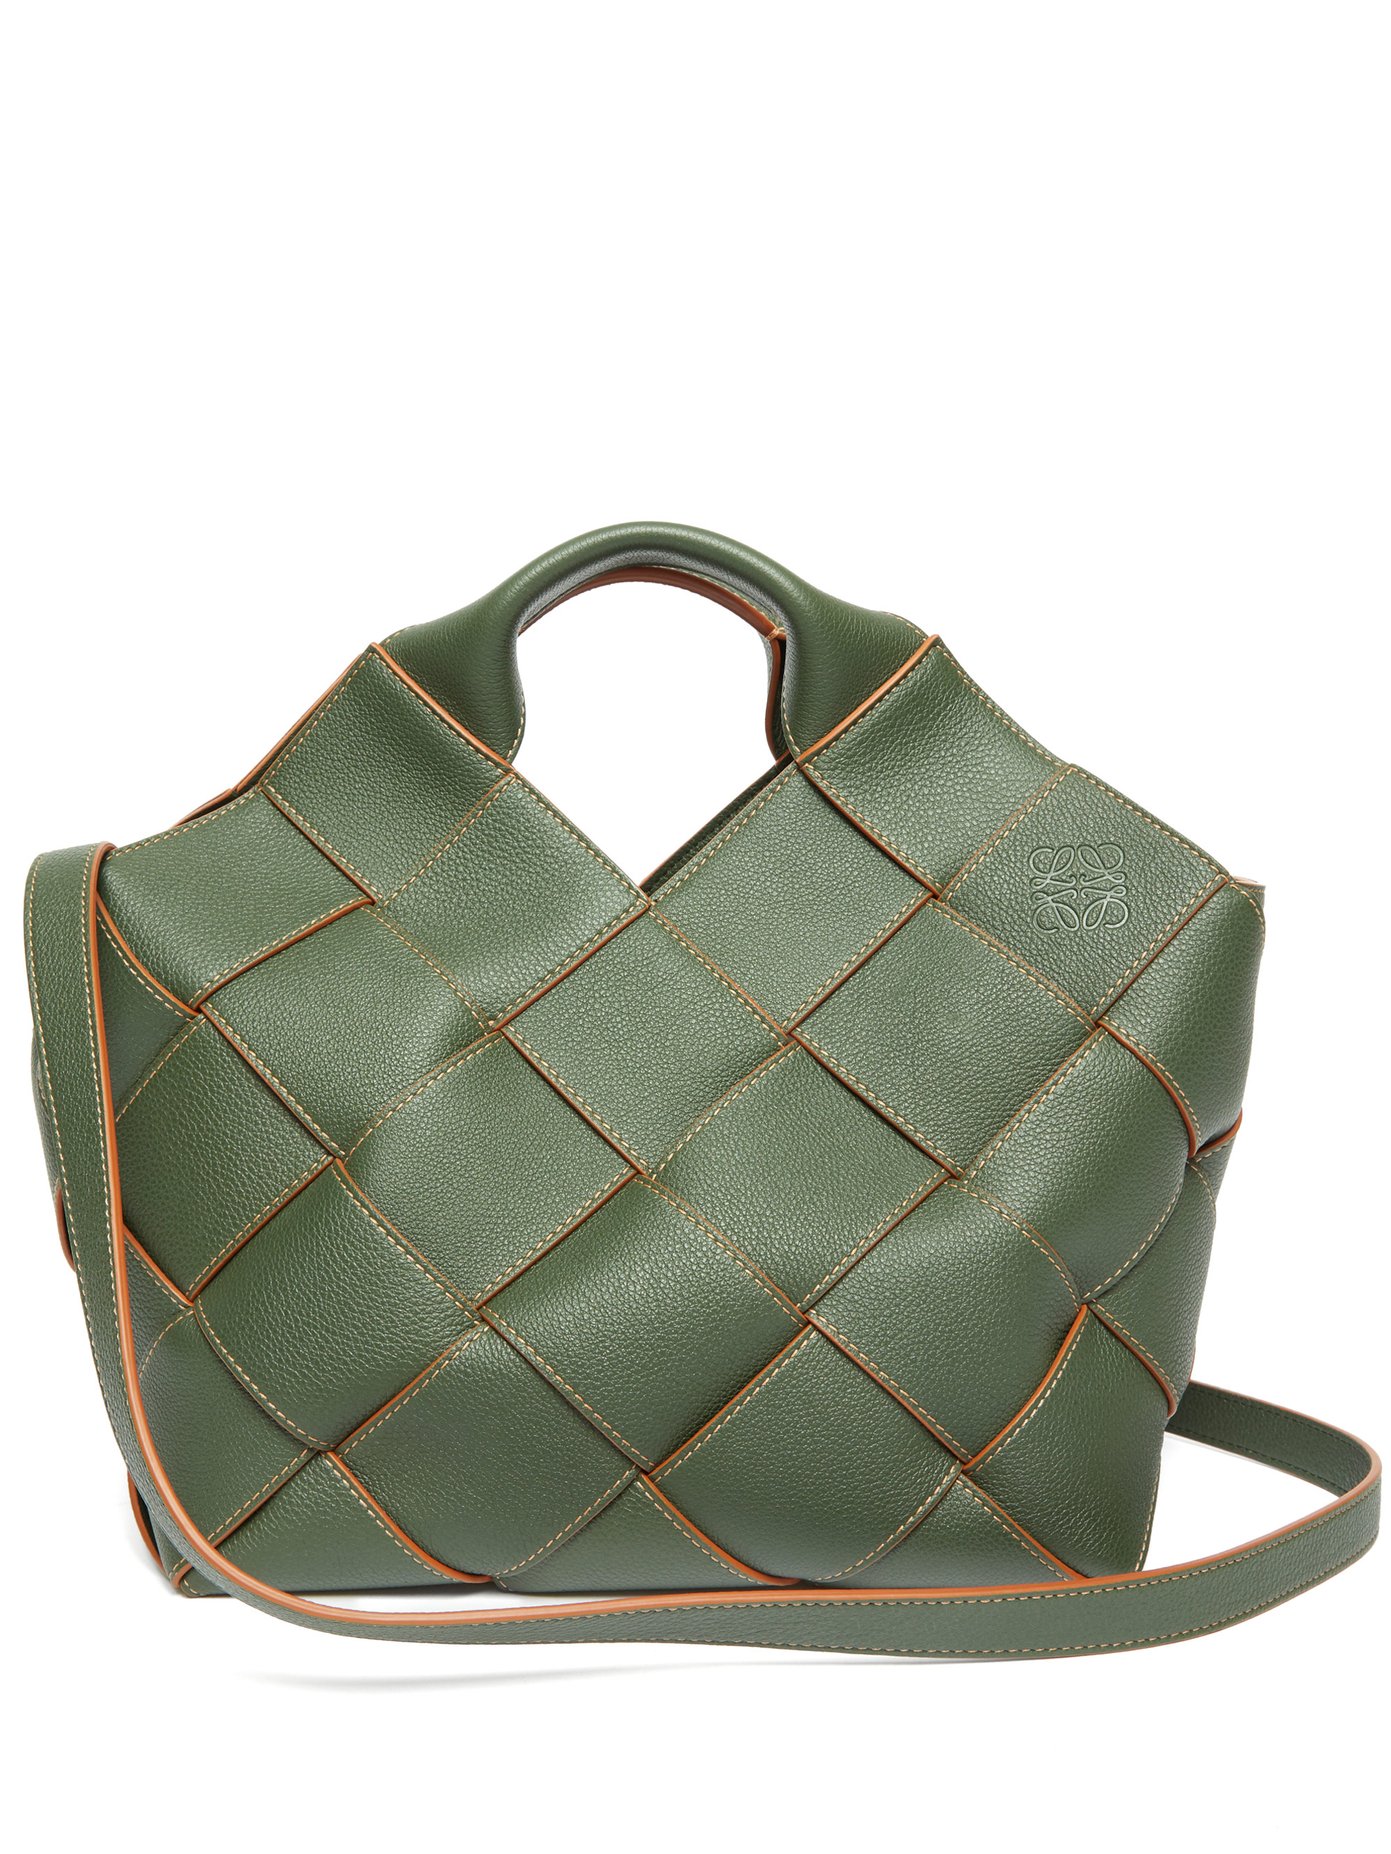 Anagram woven-leather tote bag | Loewe 